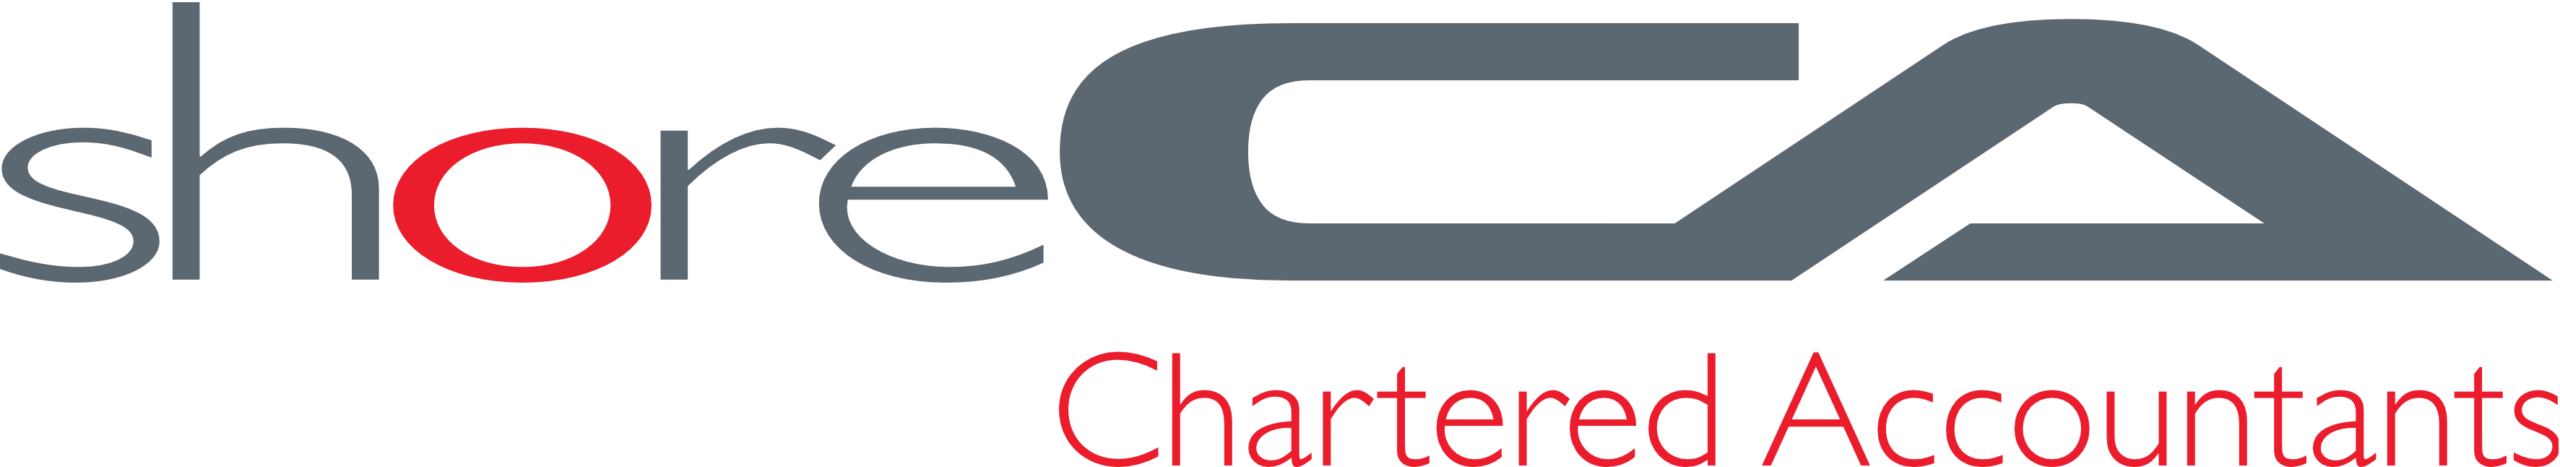 Shore Chartered Accountants transparent logo